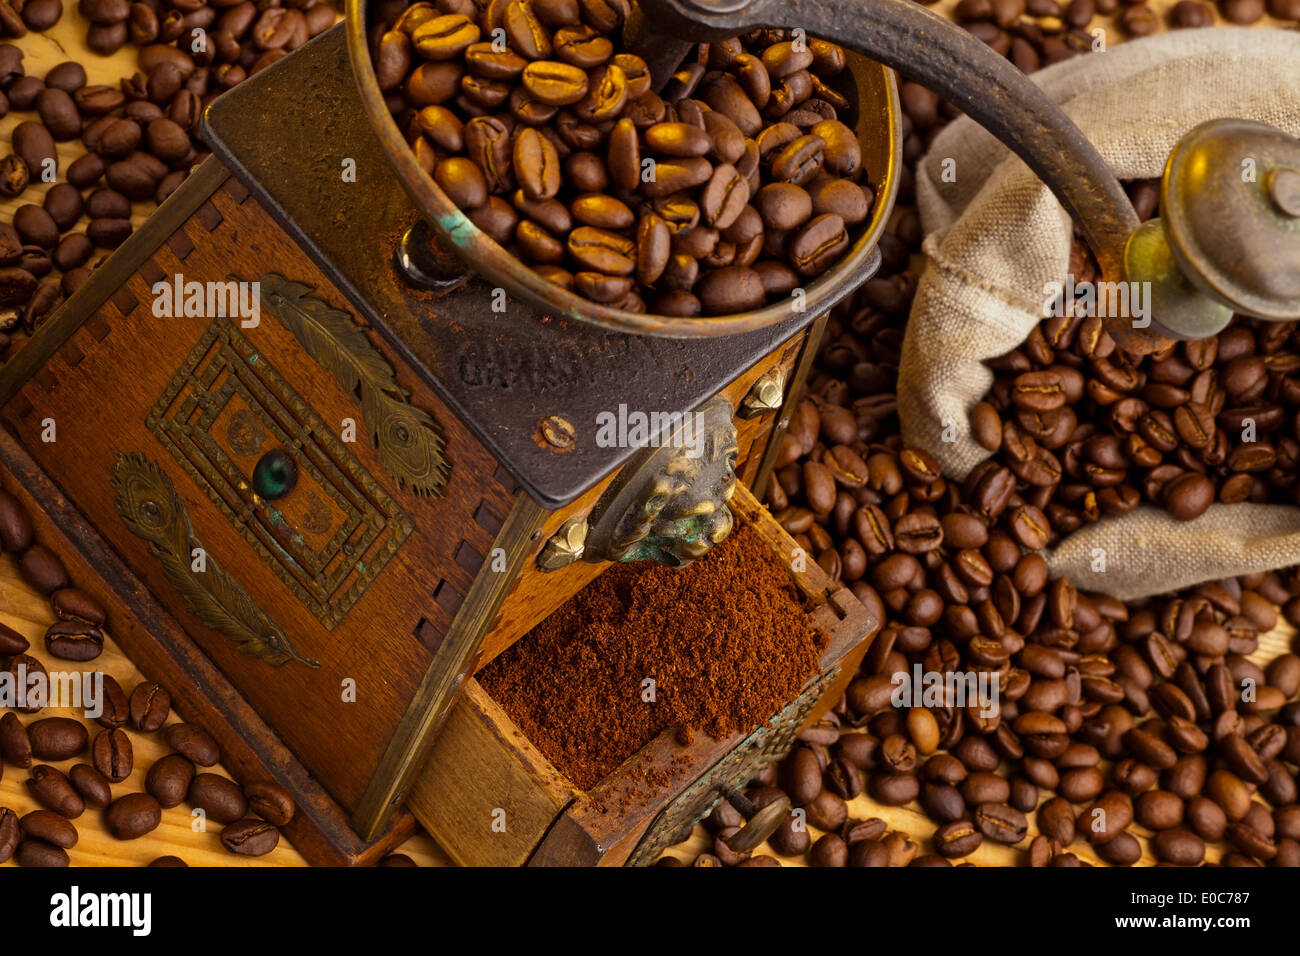 Molti i chicchi di caffè si trovano accanto a un macinino da caffè. Caffè macinato fresco, Viele Kaffeebohnen liegen neben einer Kaffeemuehle. Frisch g Foto Stock